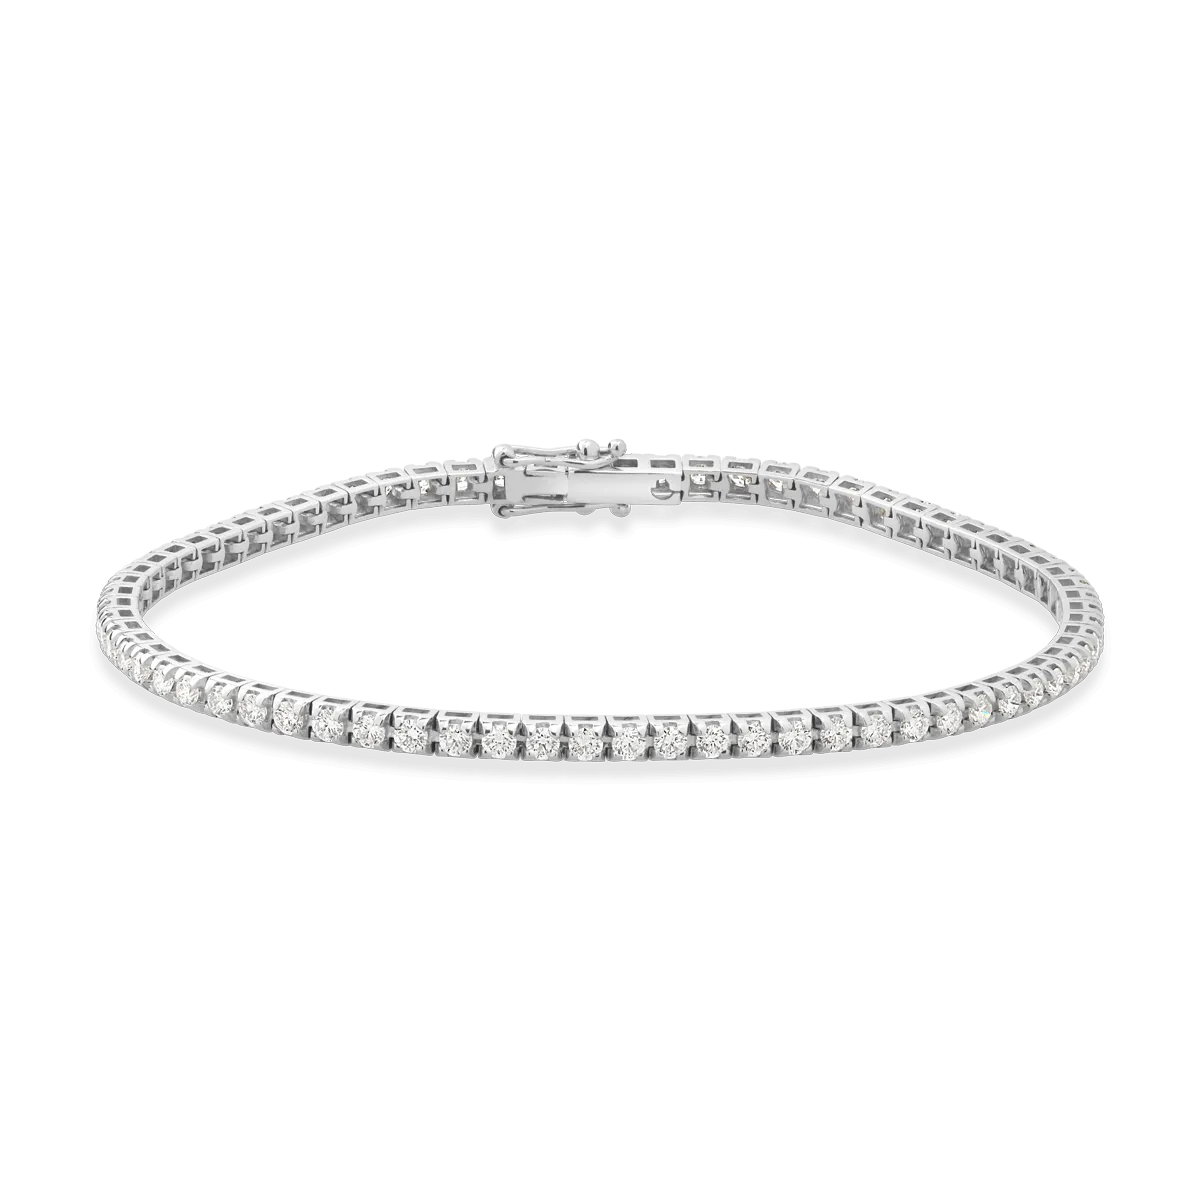 18K white gold tennis bracelet with 3.2ct diamonds